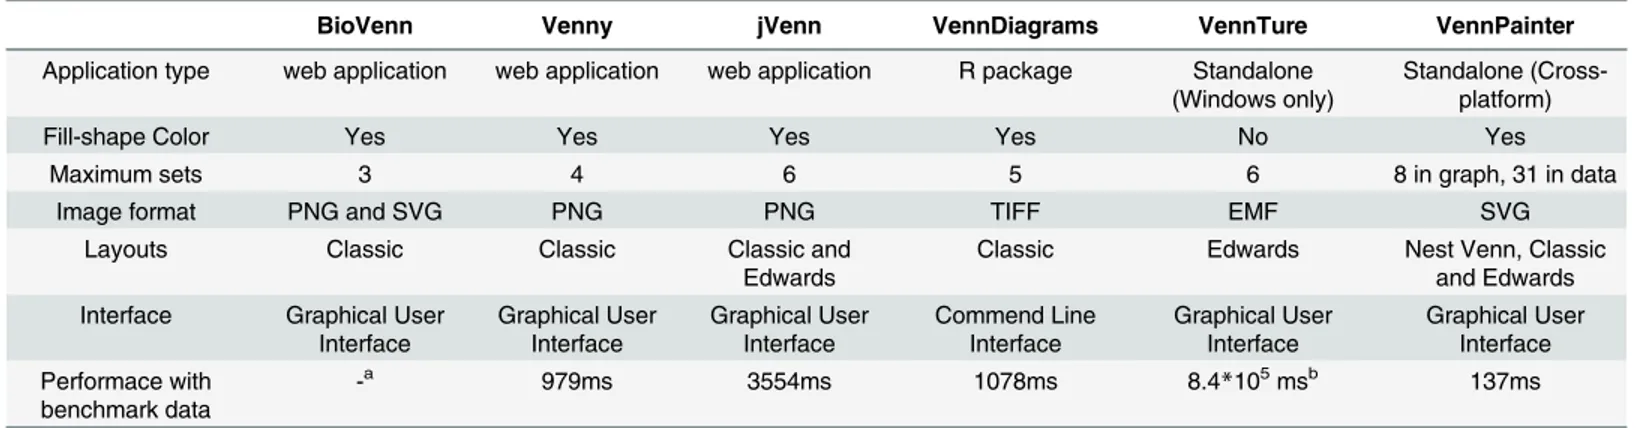 Table 1. Comparison of BioVenn, Venny, jVenn, VennDiagrams, VennTure, and VennPainter.